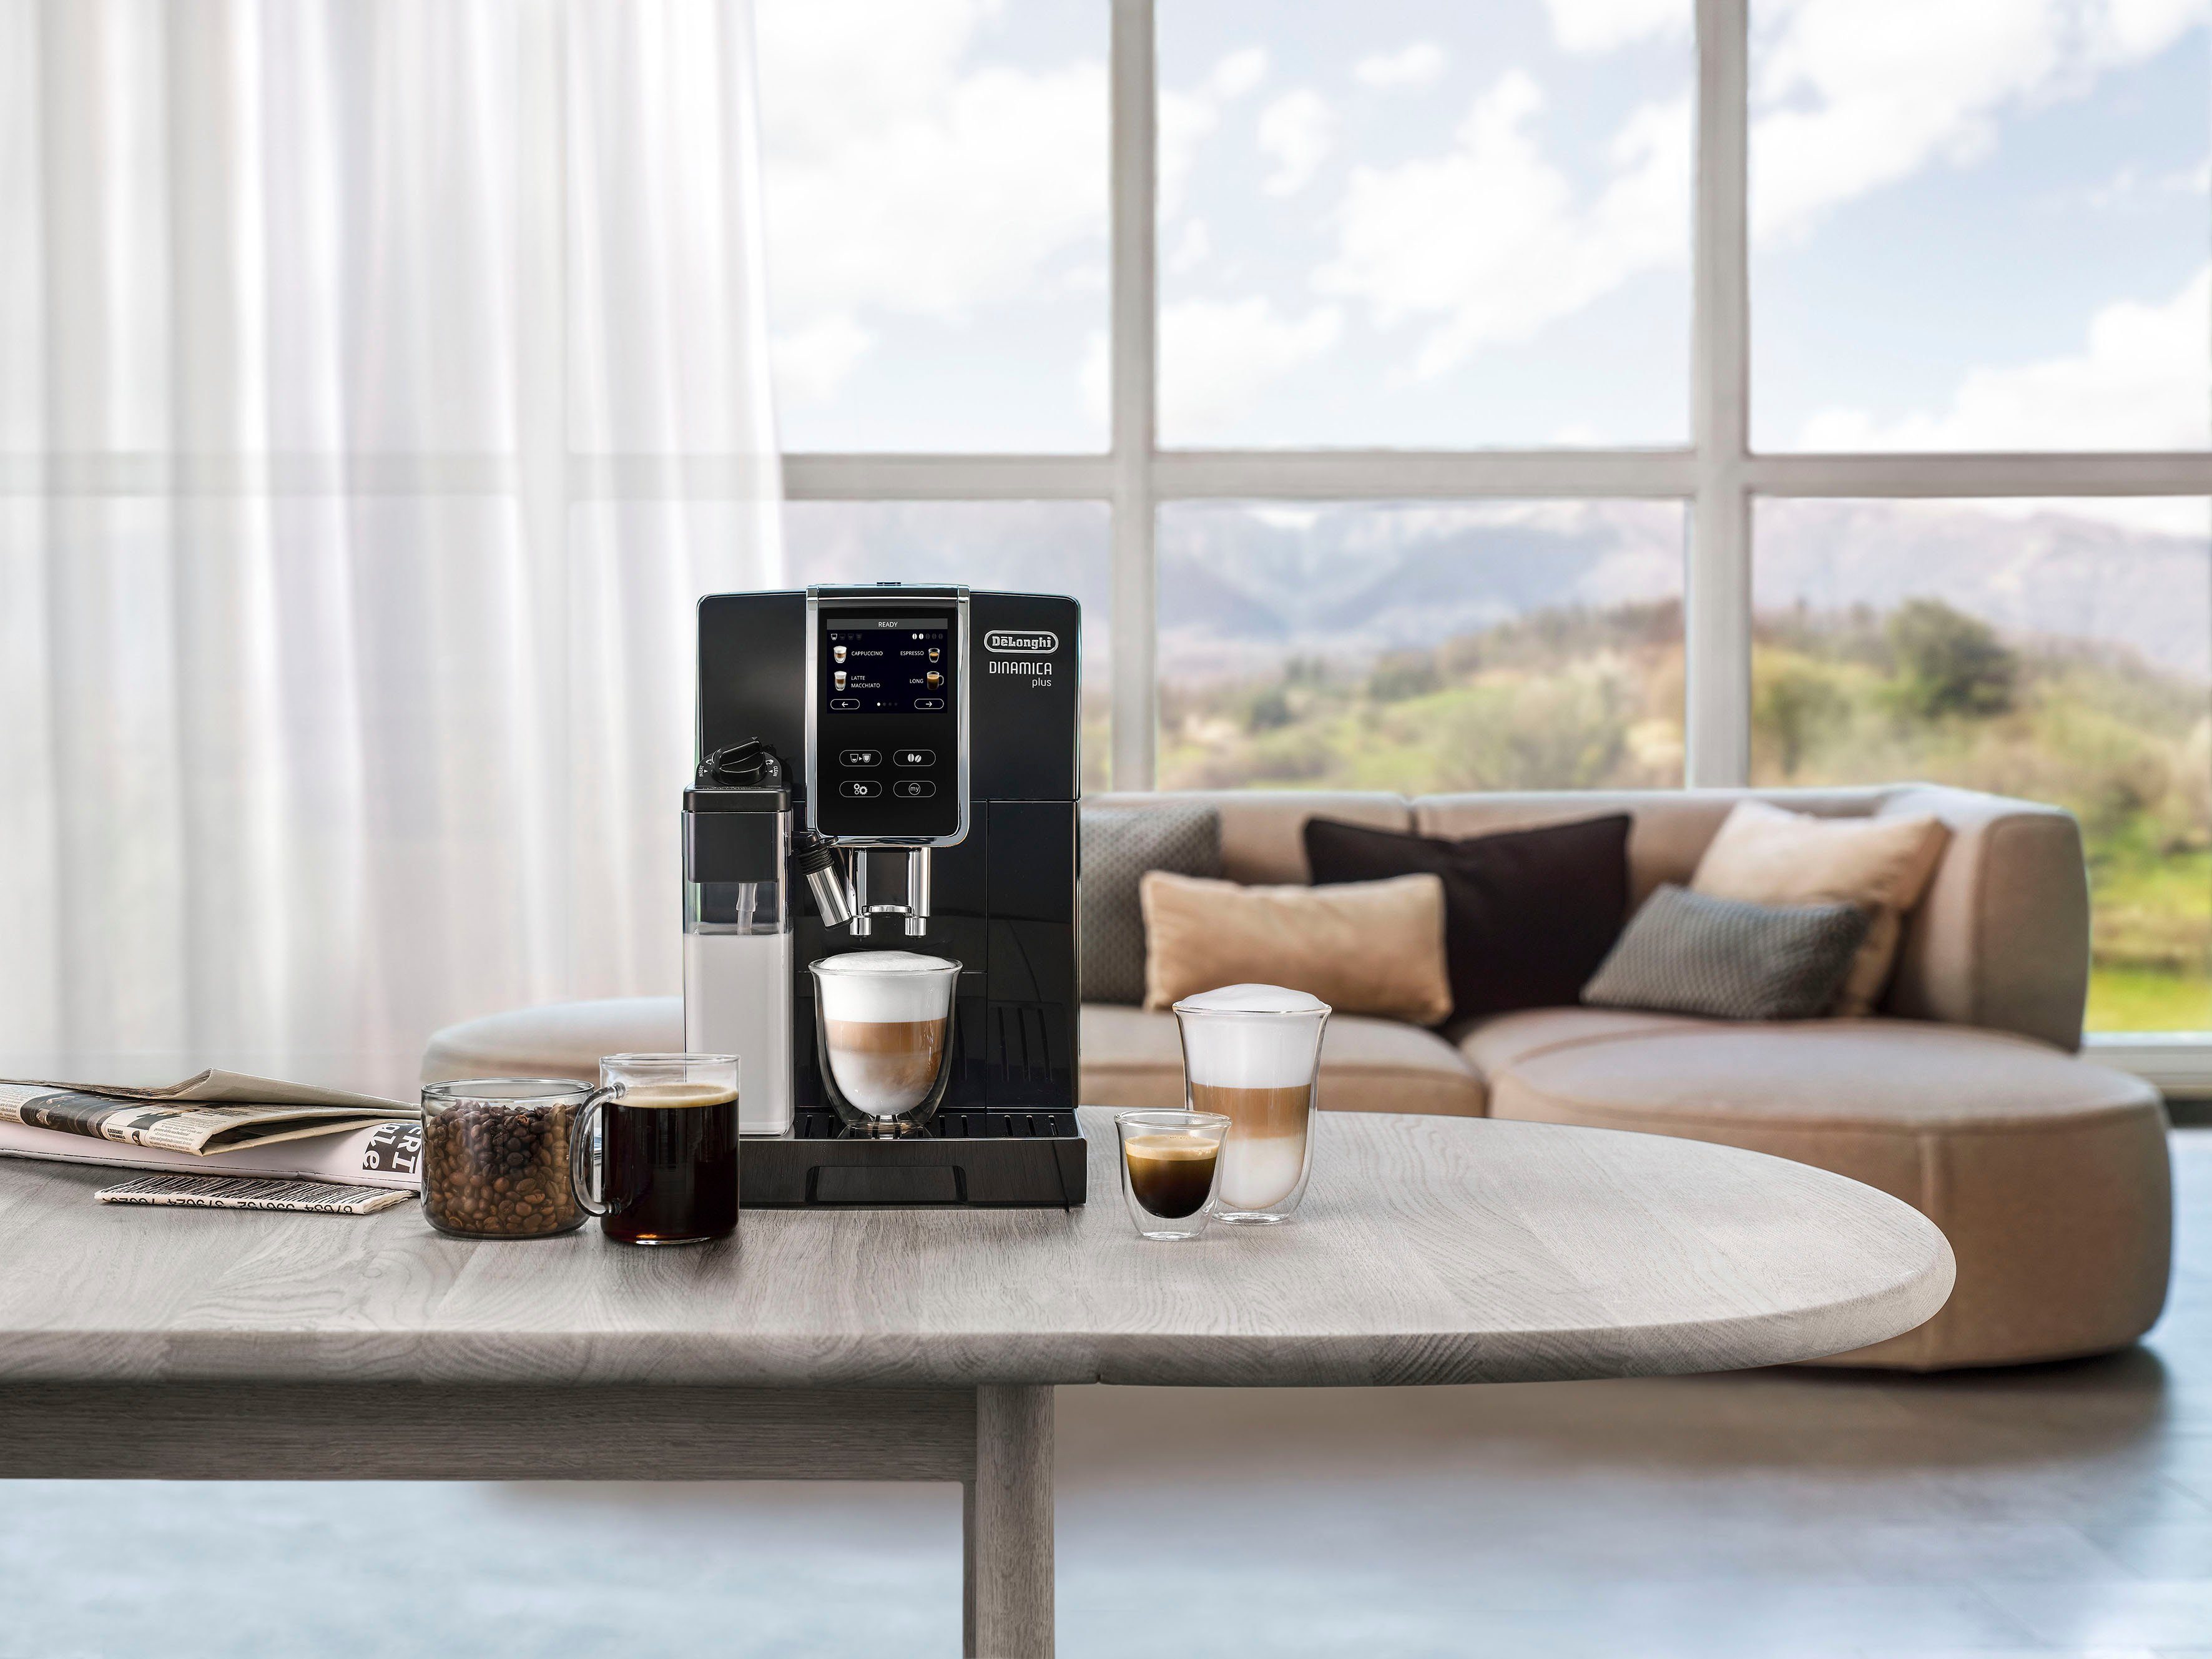 LatteCrema Kaffeevollautomat mit und ECAM Milchsystem De'Longhi Kaffeekannenfunktion 370.70.B, Plus Dinamica